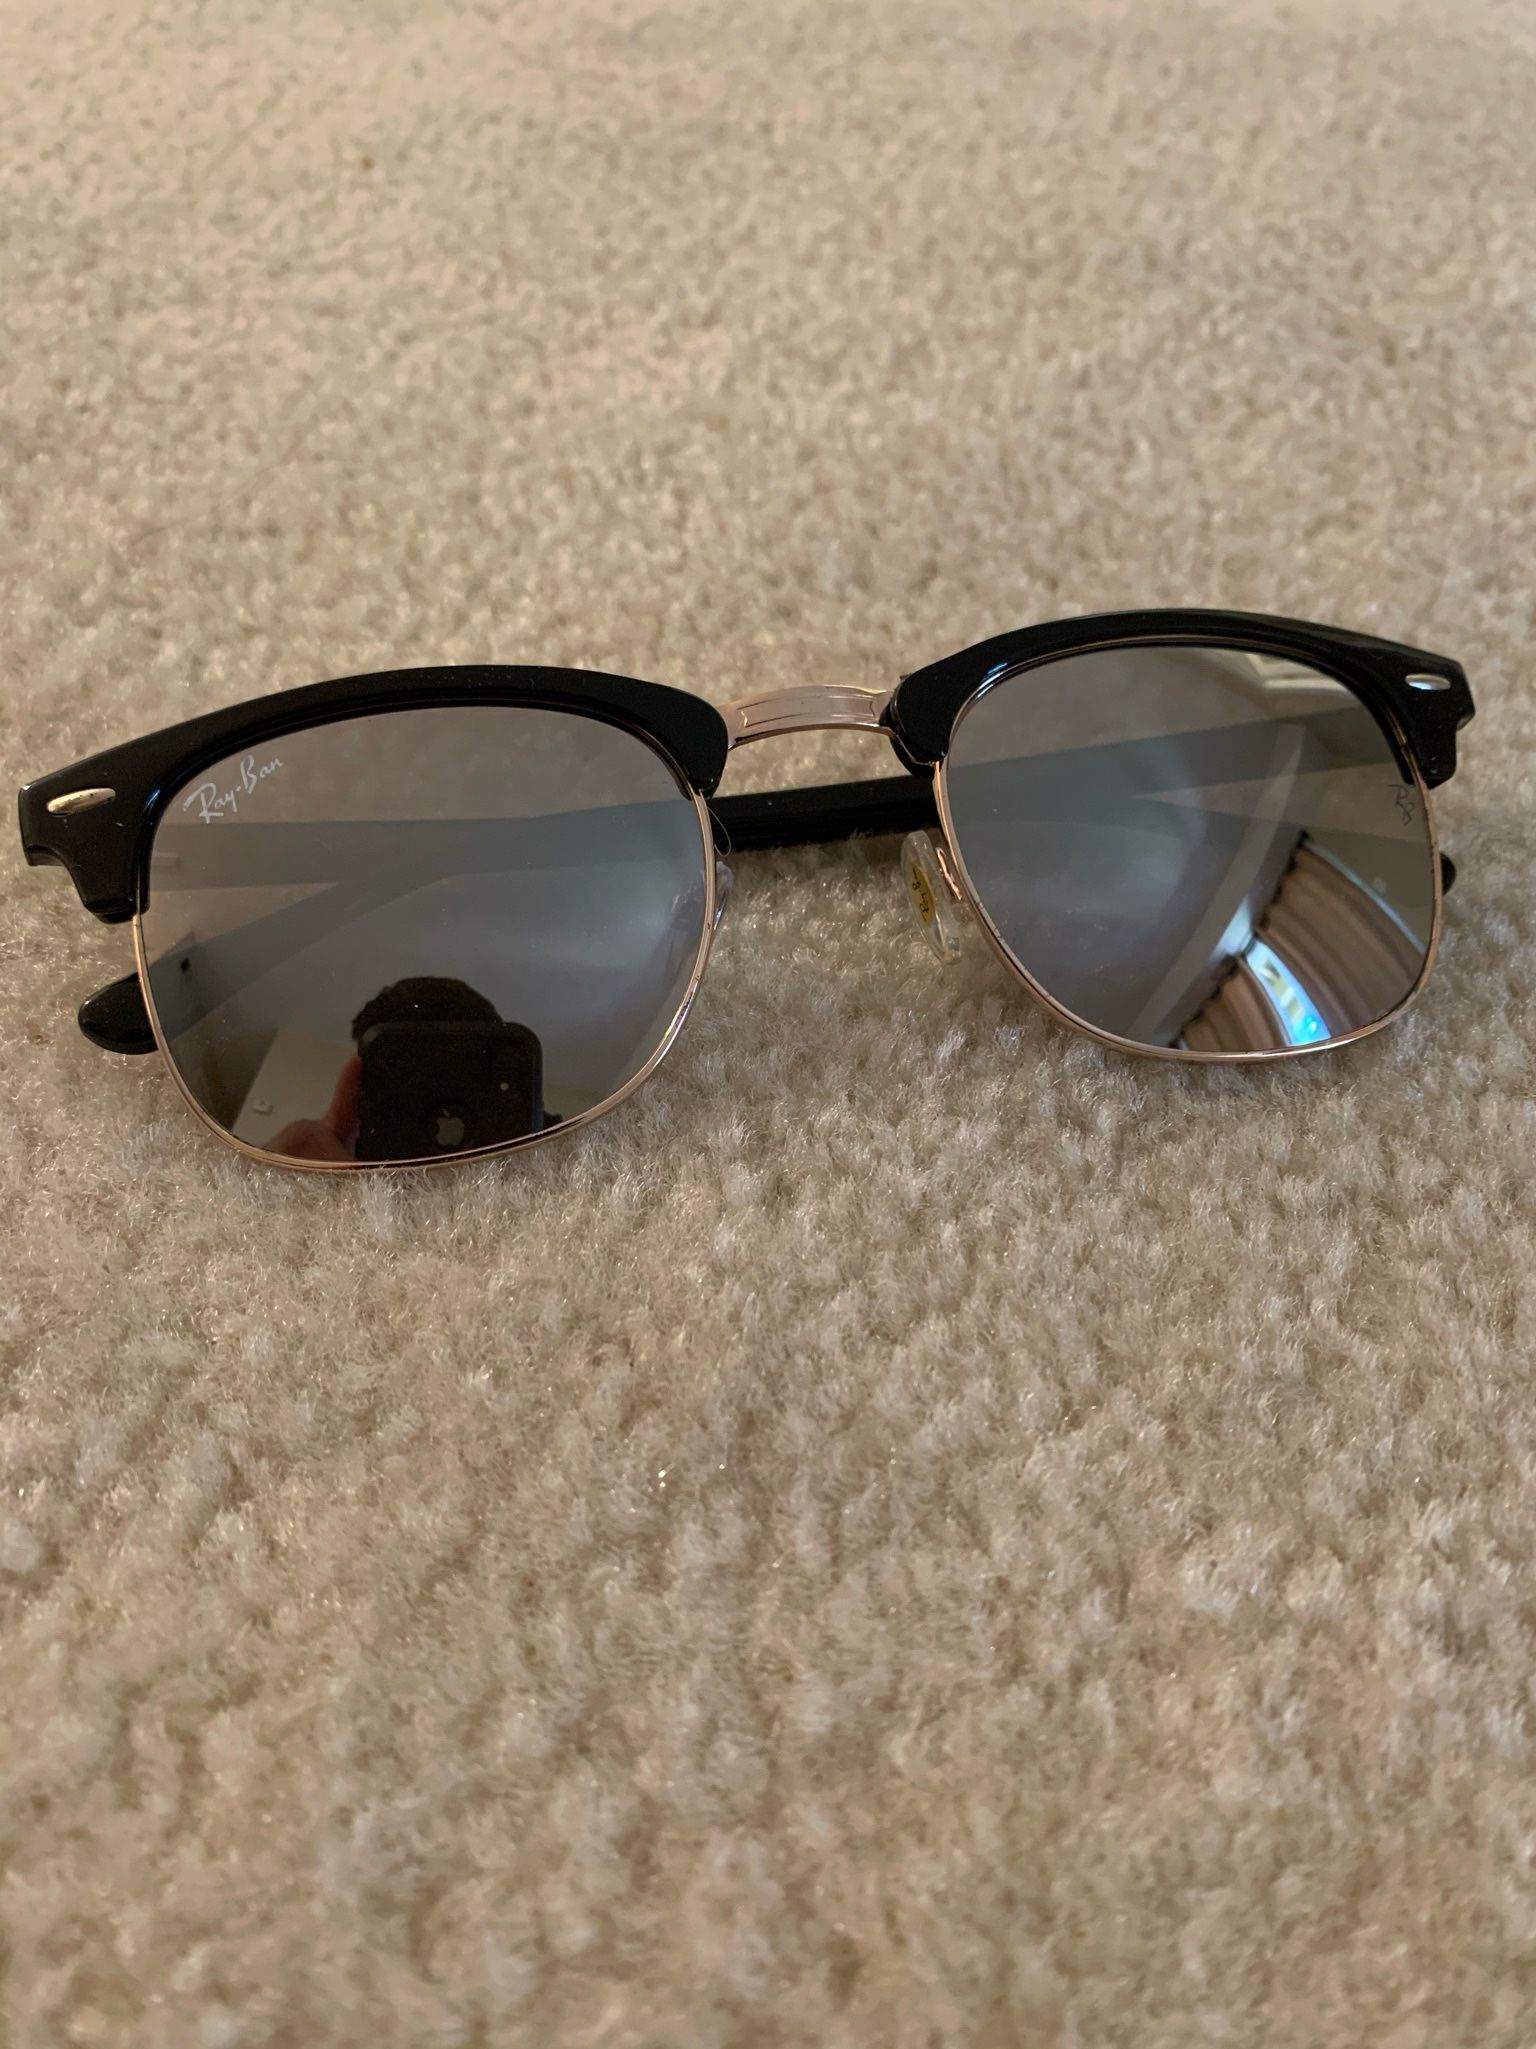 Rayban clubmaster sunglasses